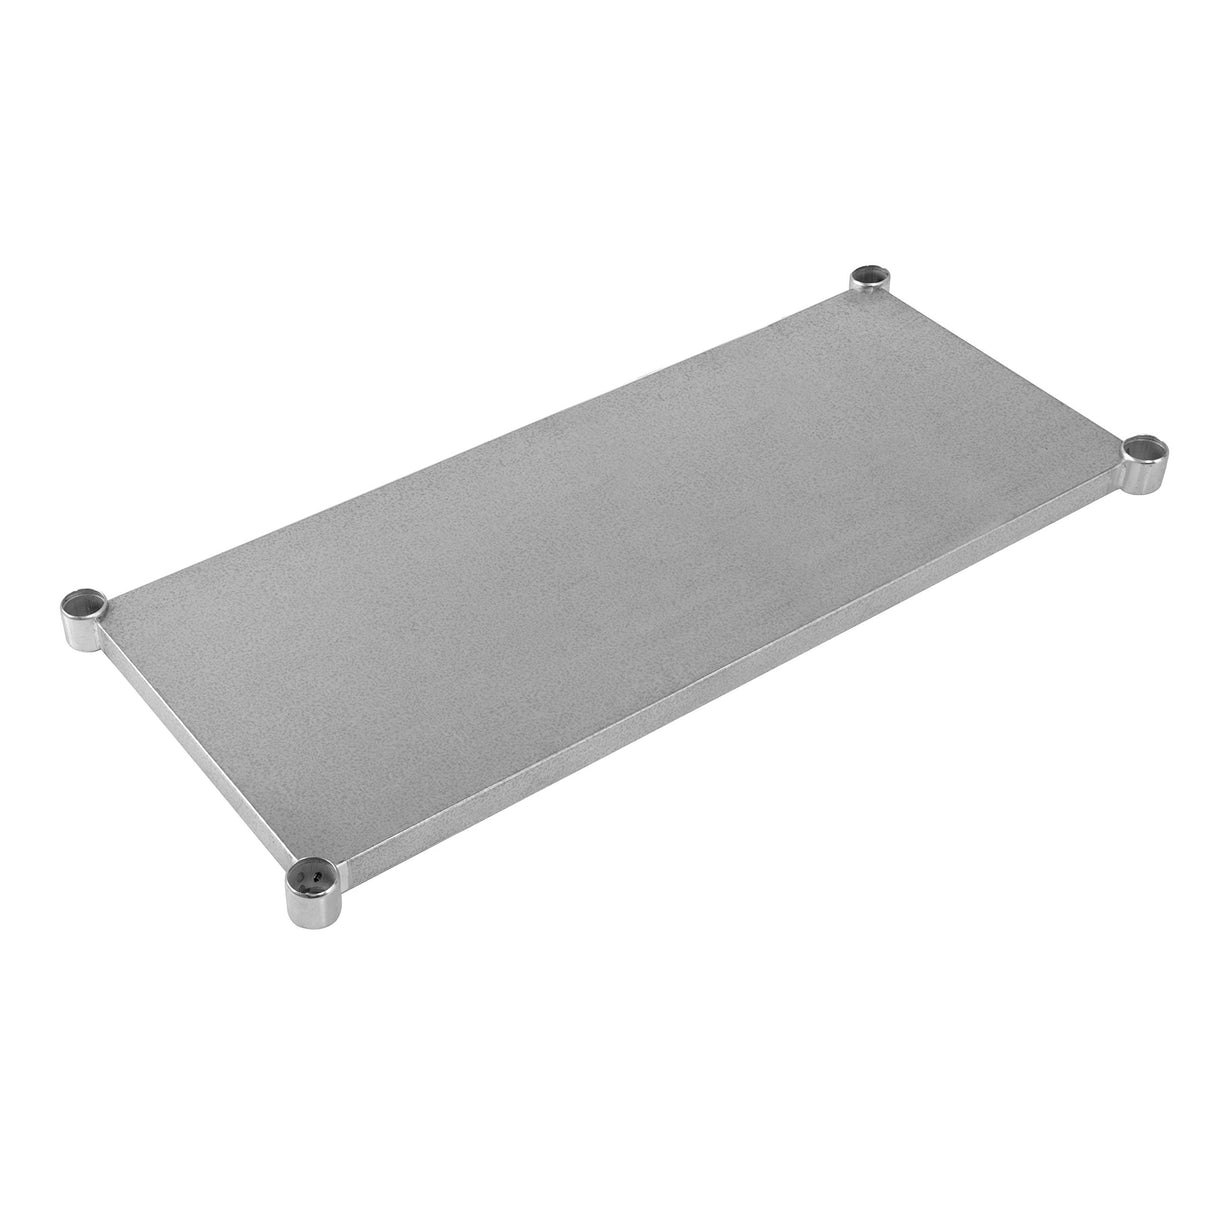 John Boos ESSK8-2460 Stainless Steel Additional/Add-On Work Table Lower Shelf/Undershelf (Shelf Only), 60"L x 24"W